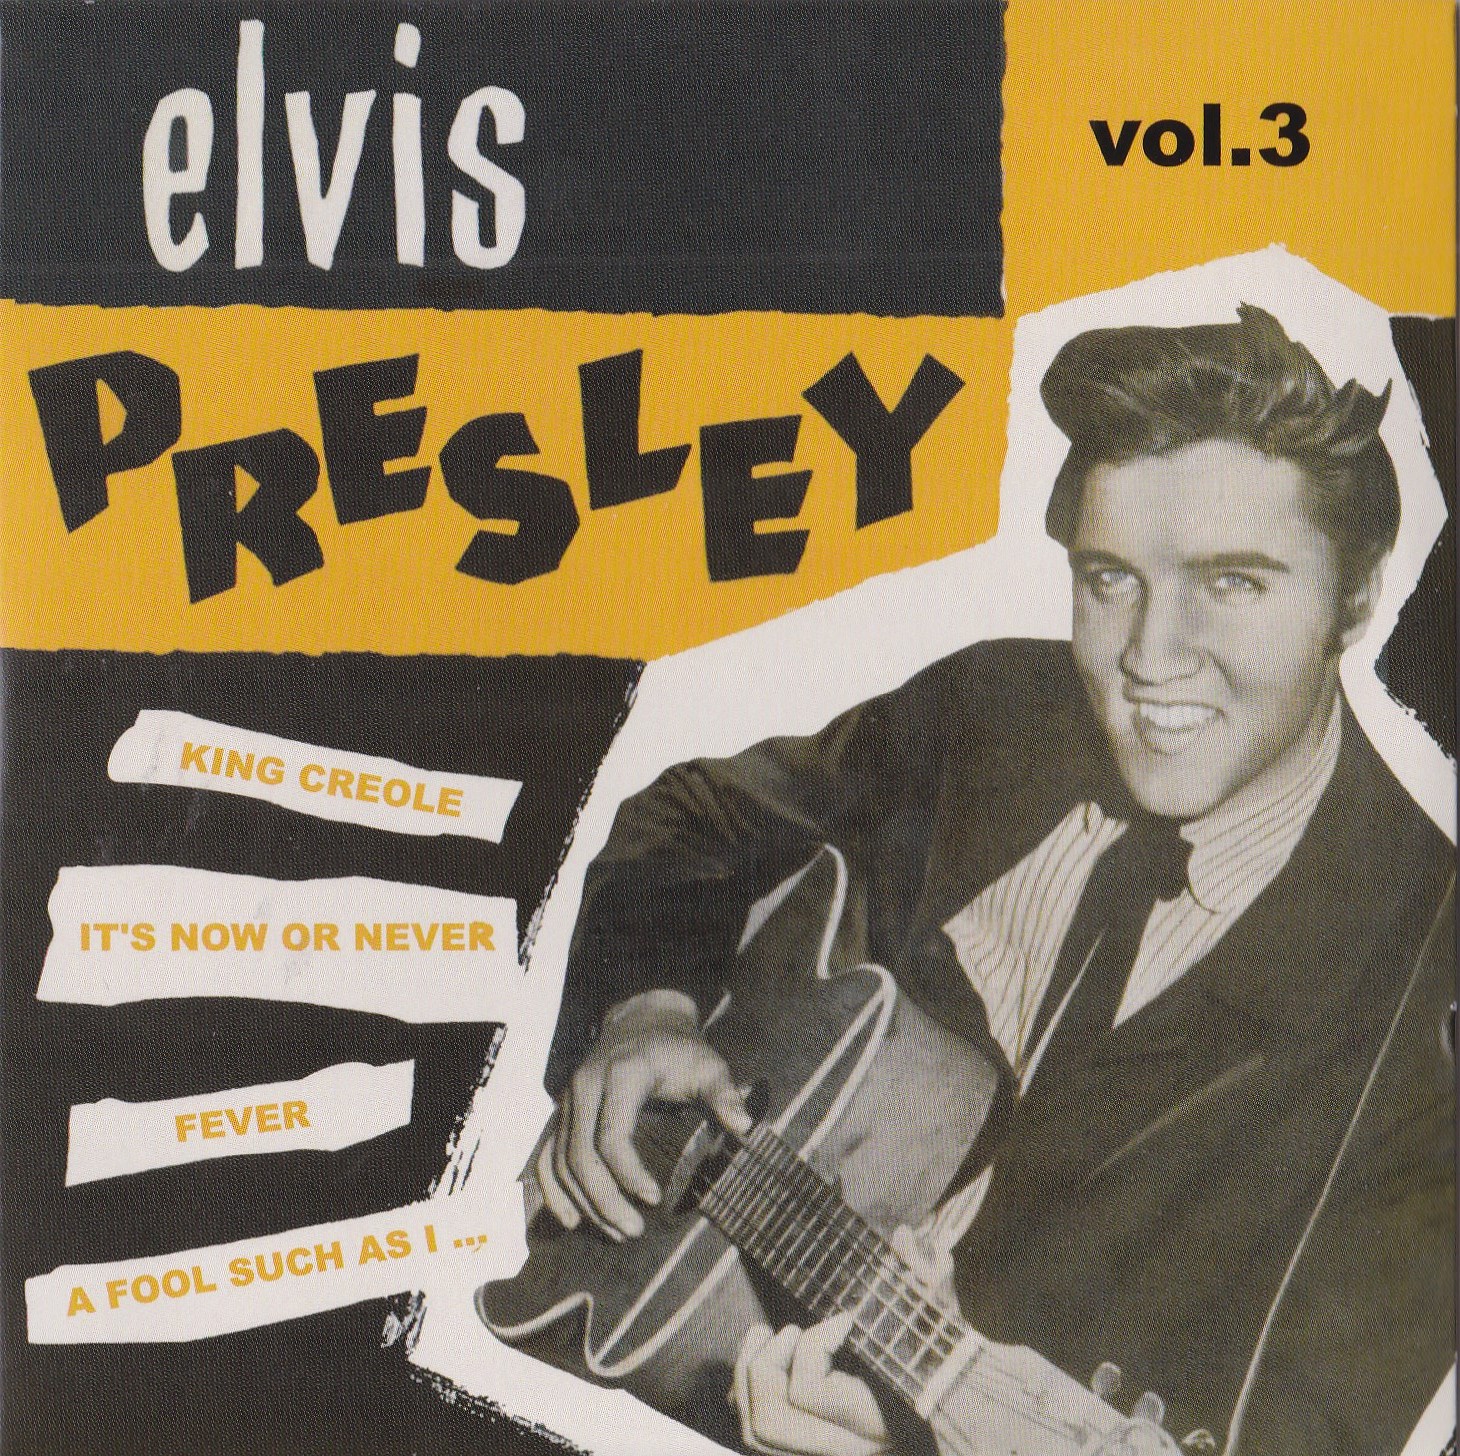 All shook up. Элвис Пресли 50s. Обложка альбома Elvis Presley Elvis Presley 1956. Elvis 1956 album. Elvis Presley обложка альбома.